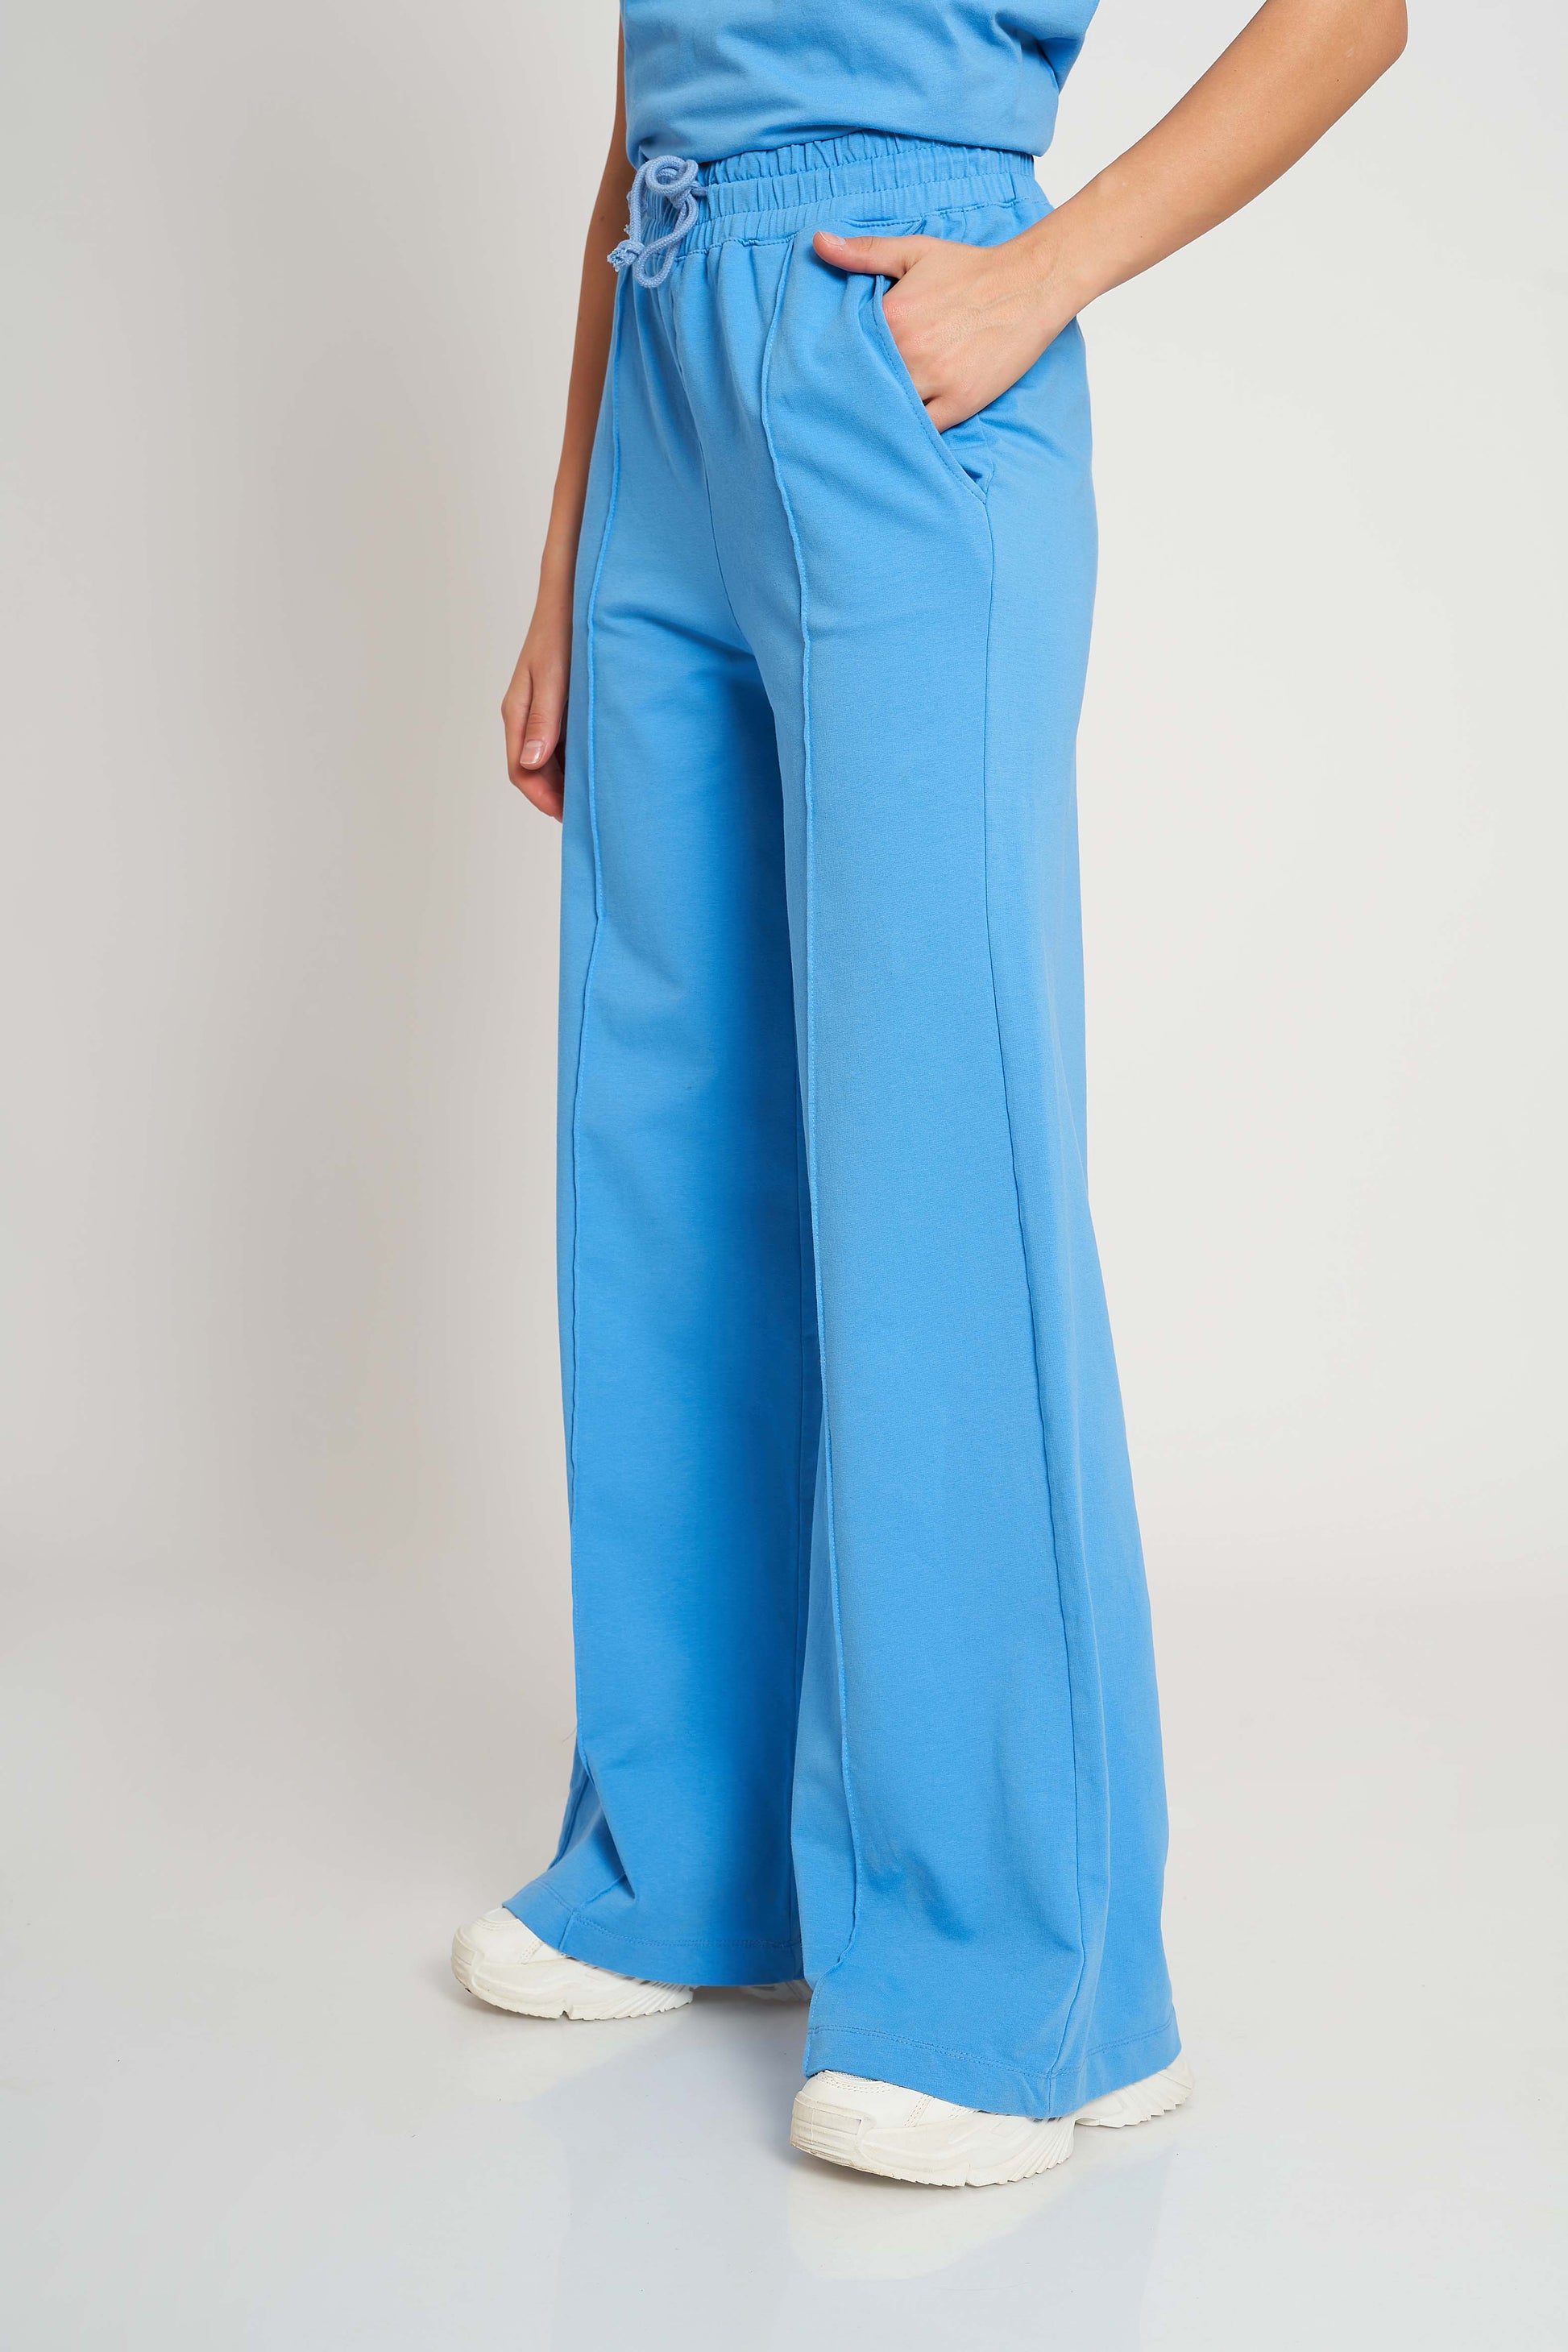 dj plush trousers with seams - blue